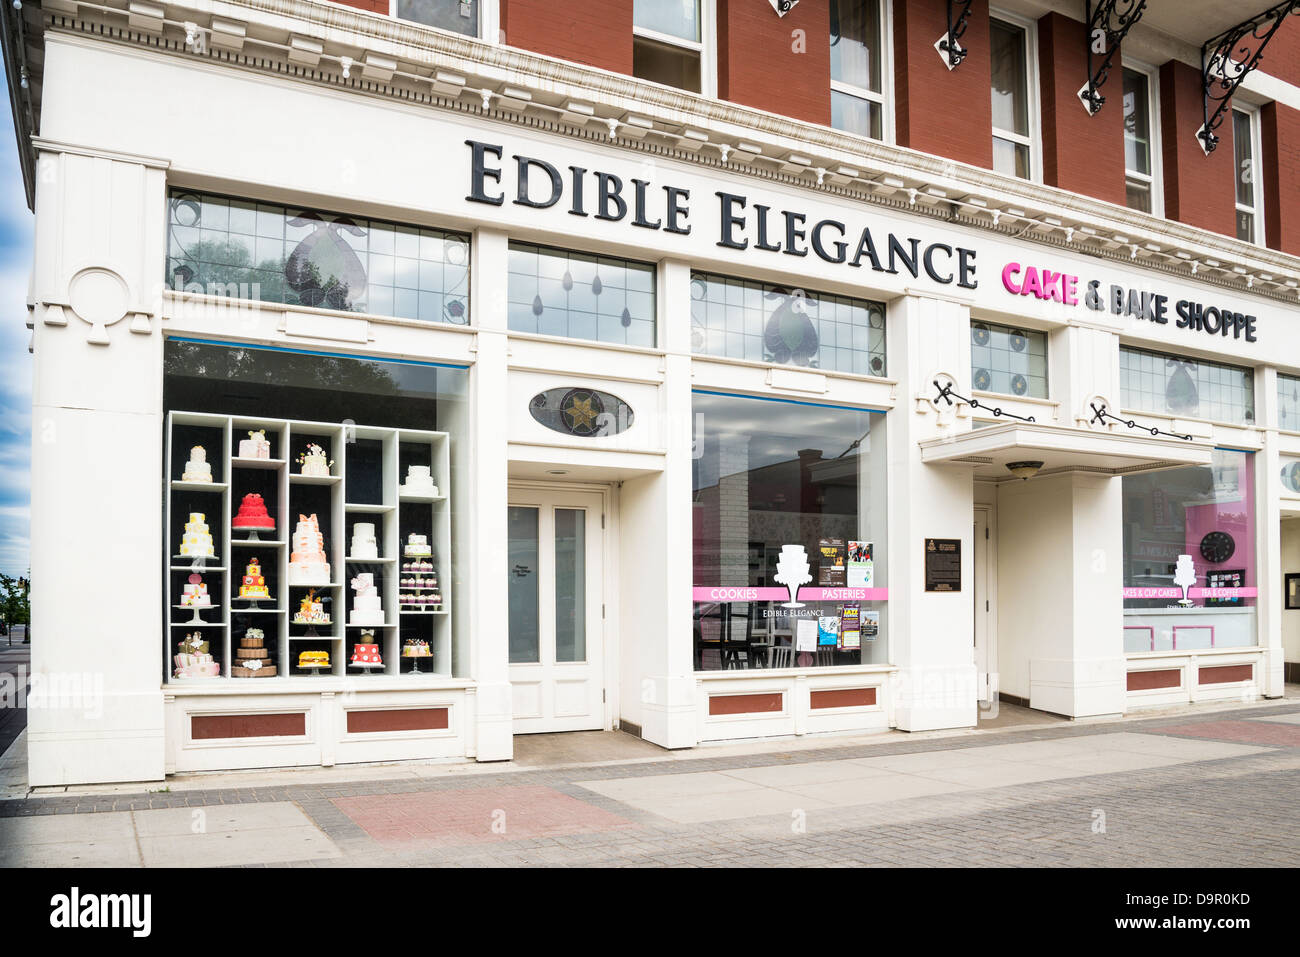 Edible Elegance Cake shop, Lethbridge, Alberta, Canada Stock Photo - Alamy